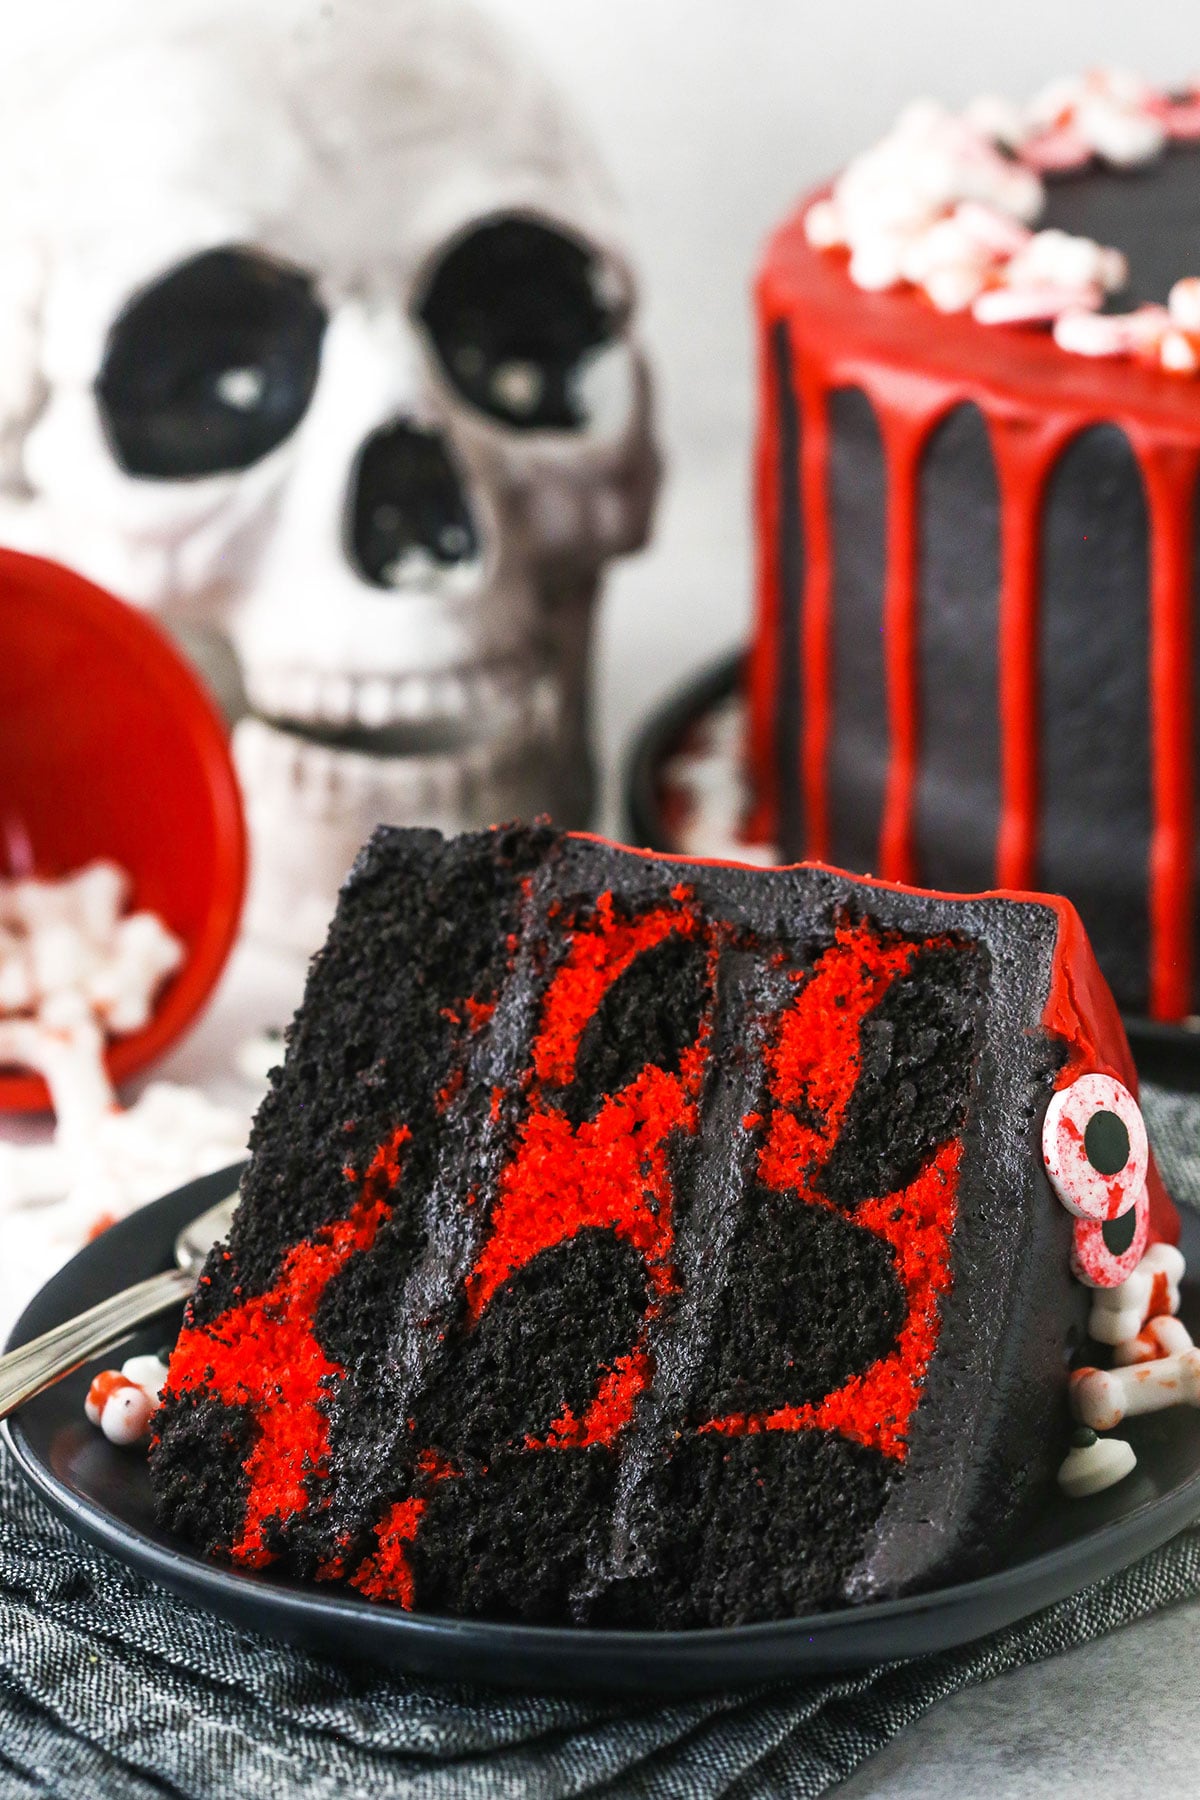 10+ Creepy Halloween Cake Ideas That'll Make Your Halloween More Amazing